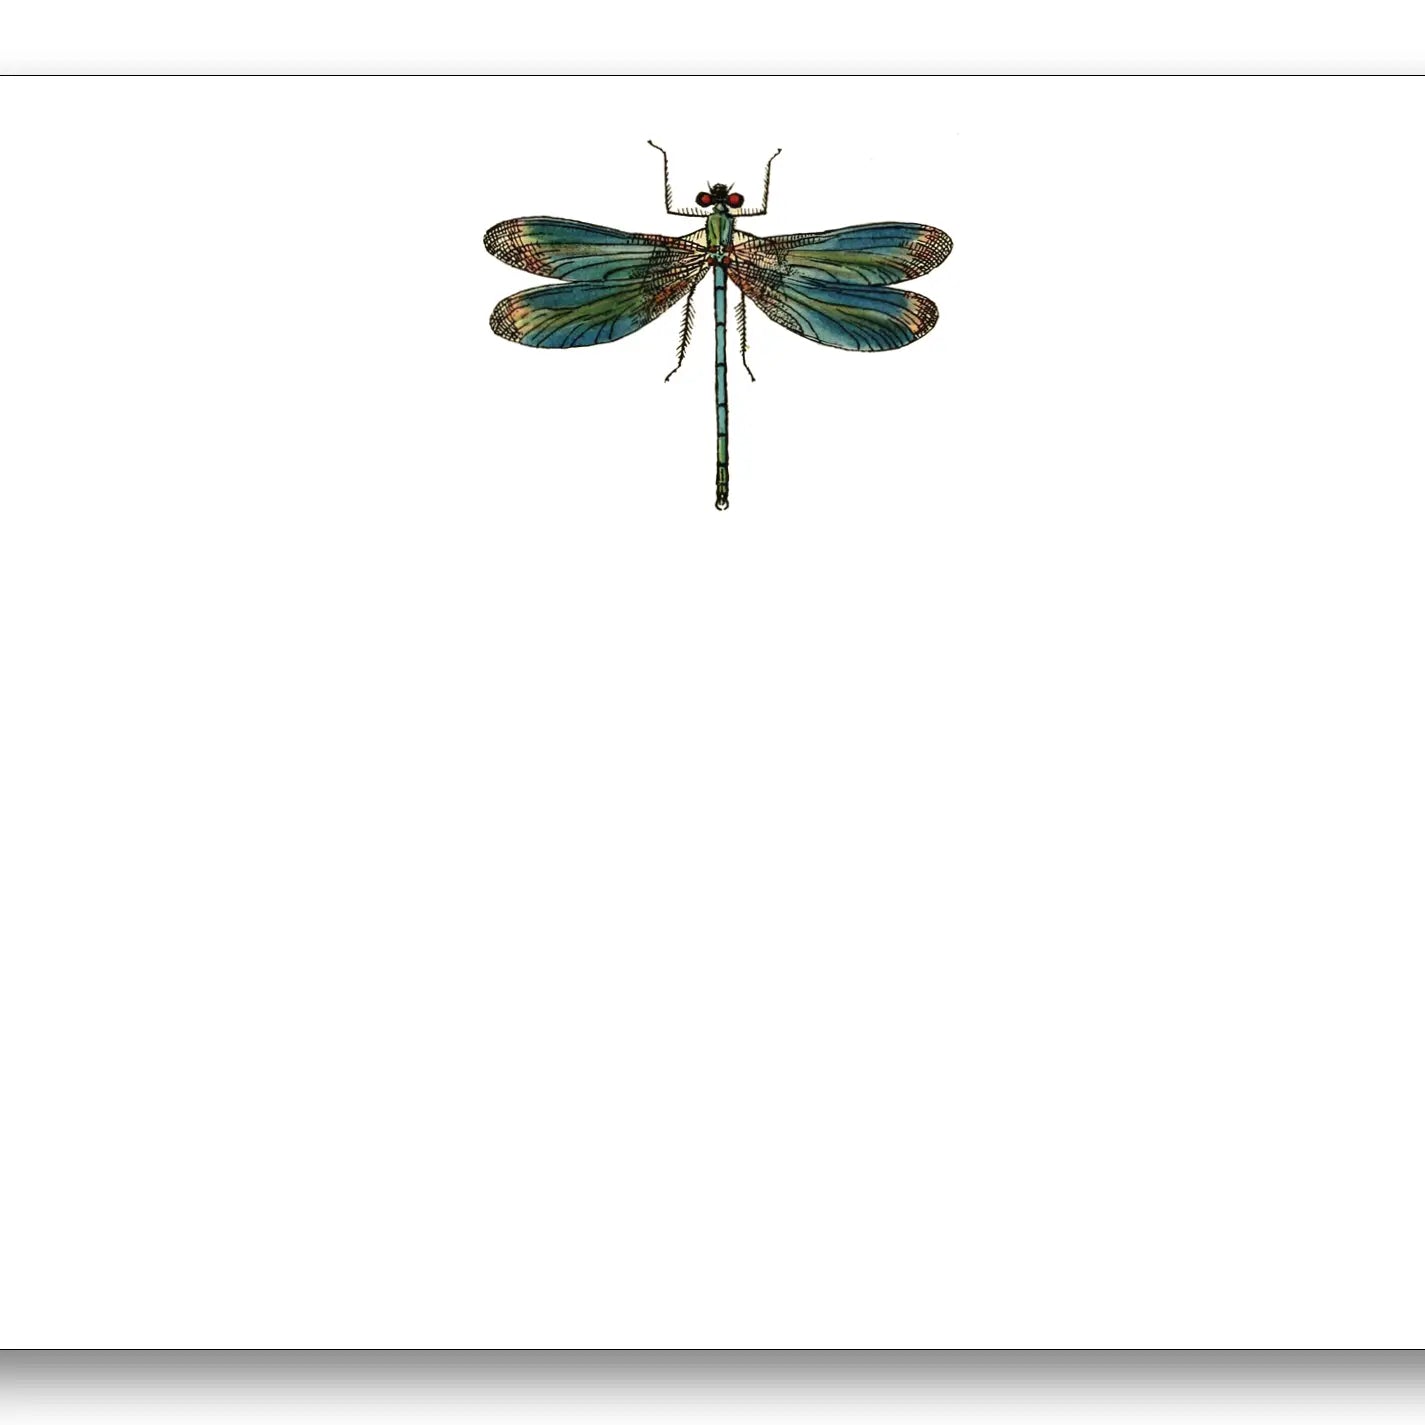 Maison de Papier Blank 4" x 6" Note Cards – Set of 8 – Dragonfly